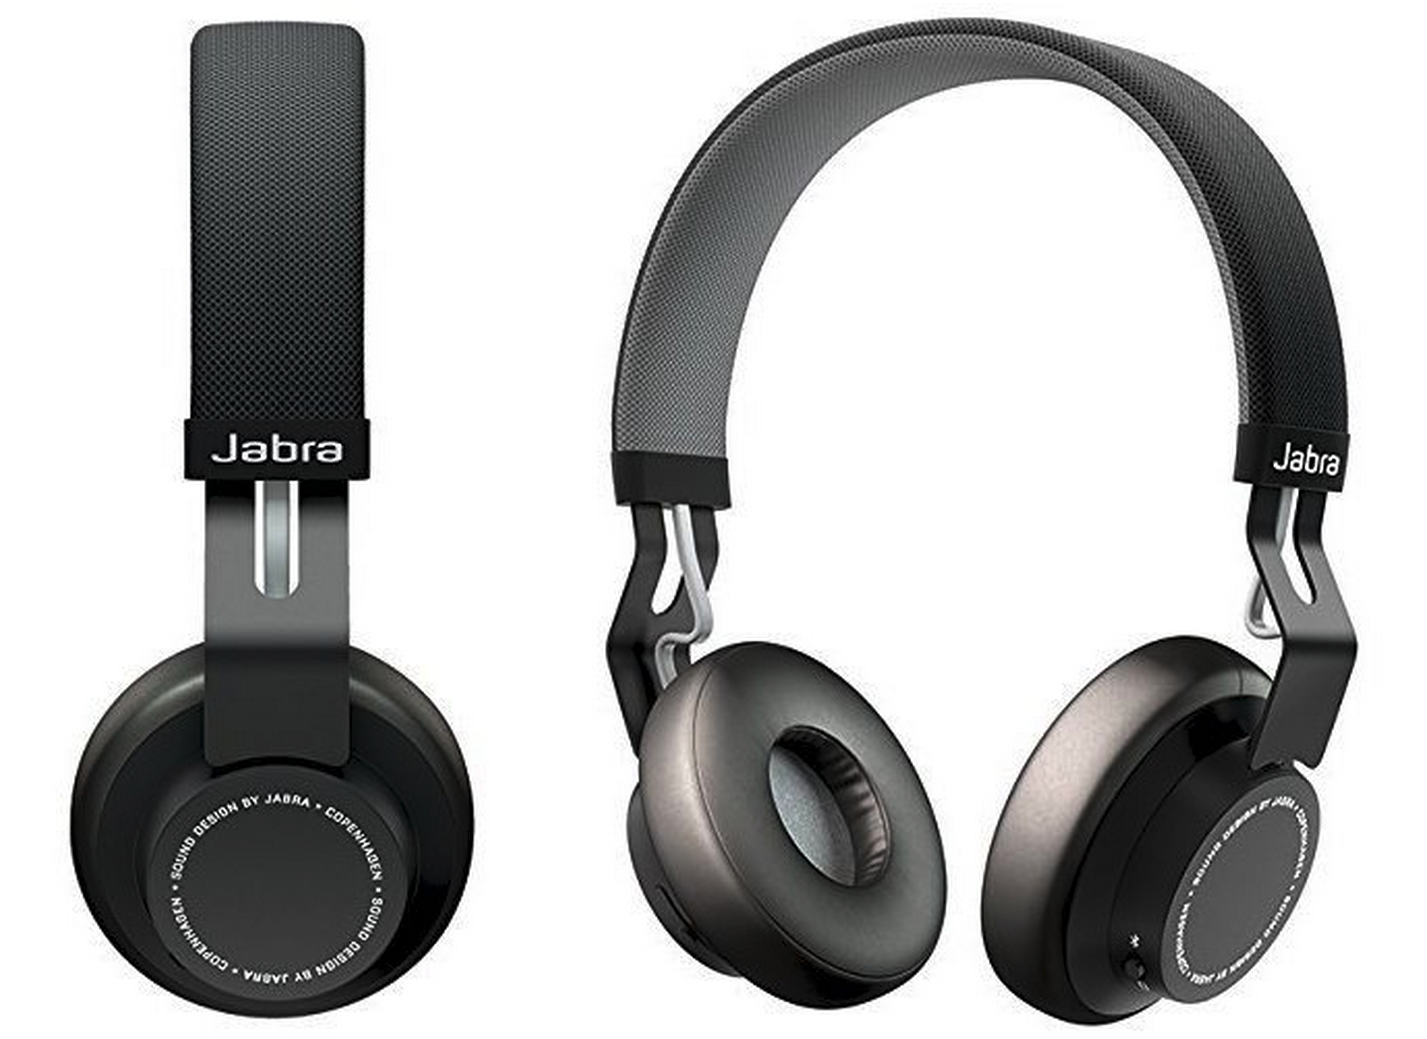 Brein importeren Boodschapper Jabra MOVE wireless on-ear headphones in black $70 shipped (Reg. $100), more